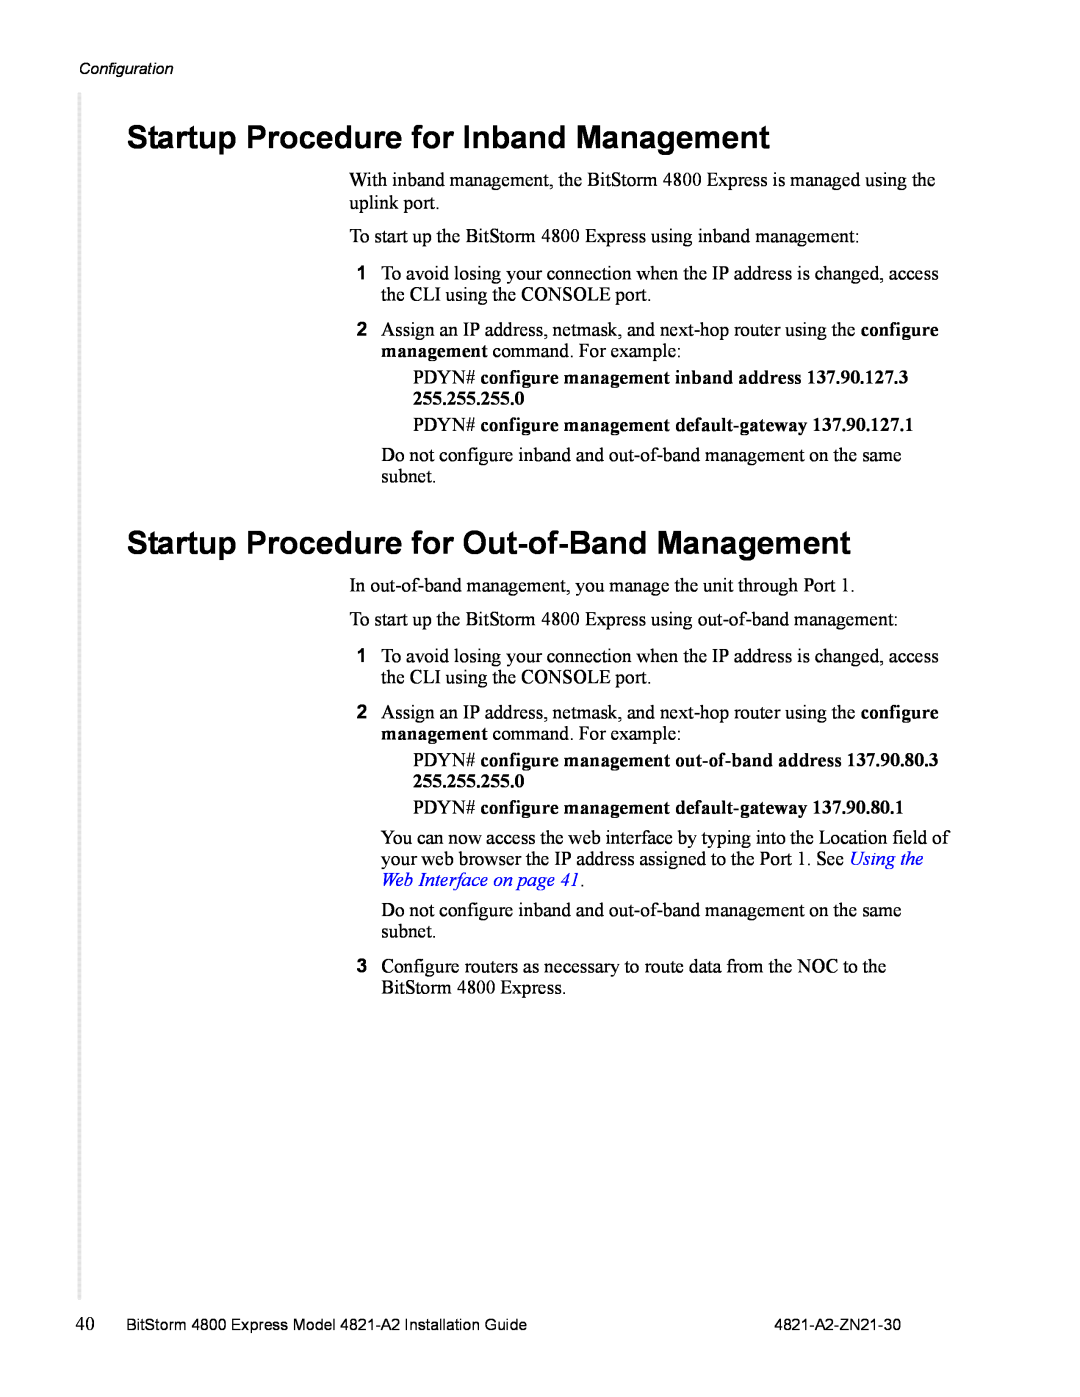 Zhone Technologies 4821-A2 manual Startup Procedure for Inband Management, Startup Procedure for Out-of-Band Management 